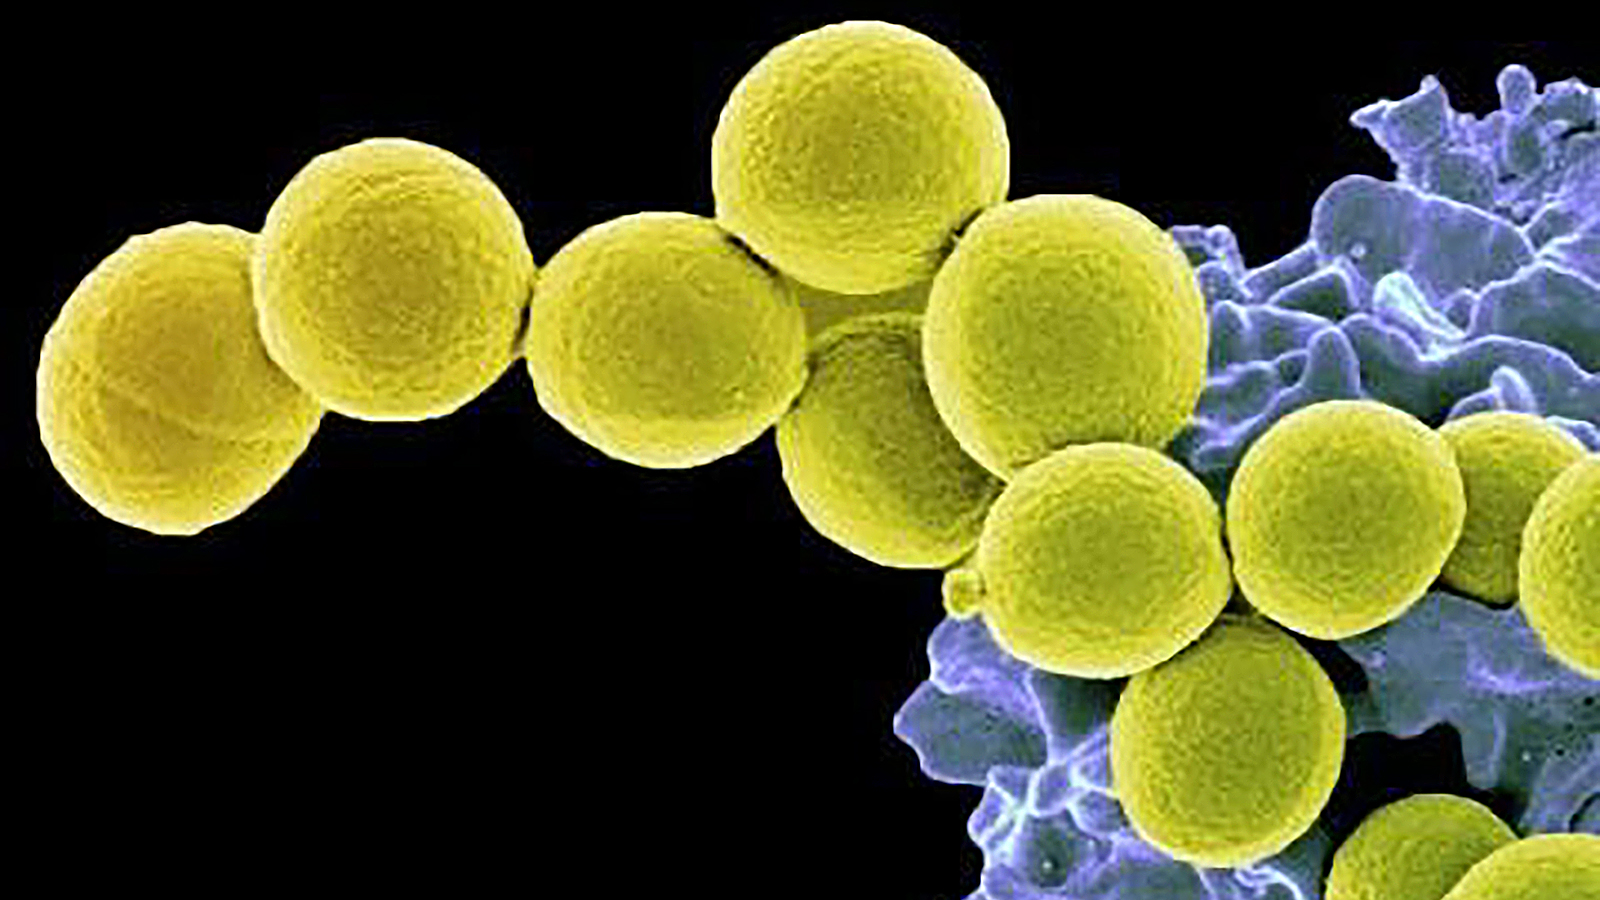 1 staphylococcus aureus. Стафилококк золотистый Staphylococcus aureus. Сапрофитный стафилококк. Золотистый стафилококк CA-MRSA что это. Пневмококк золотистый стафилококк.